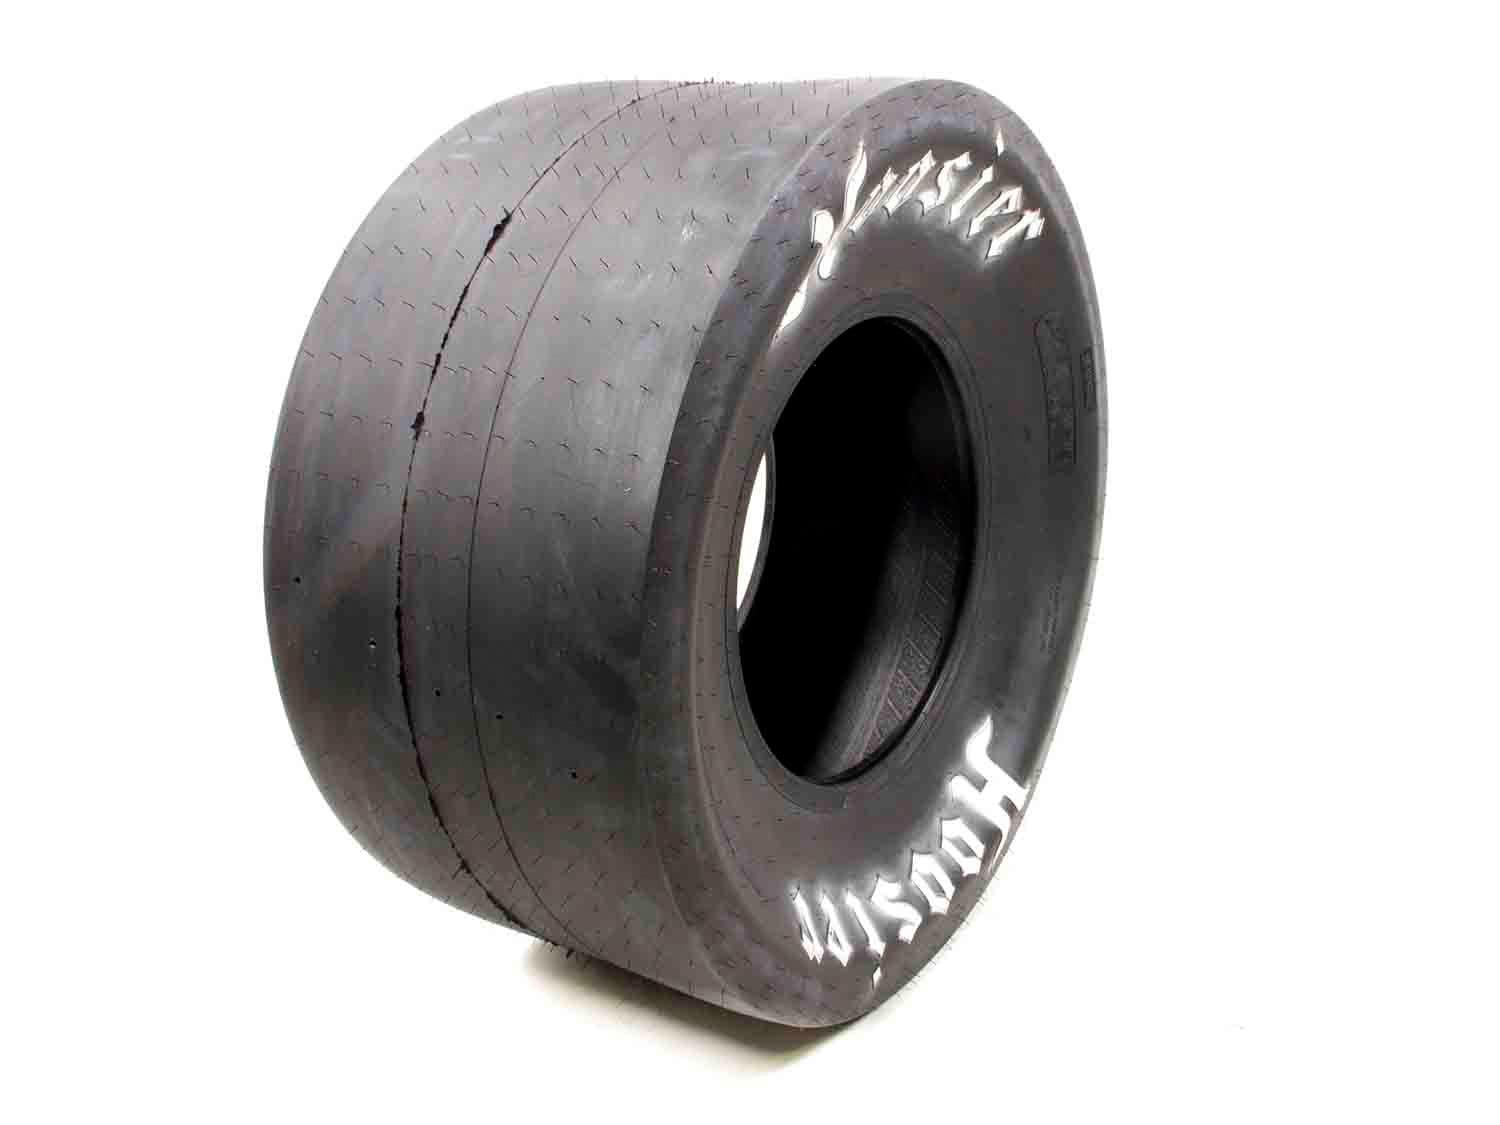 30.0/9-15 Drag Tire - Burlile Performance Products